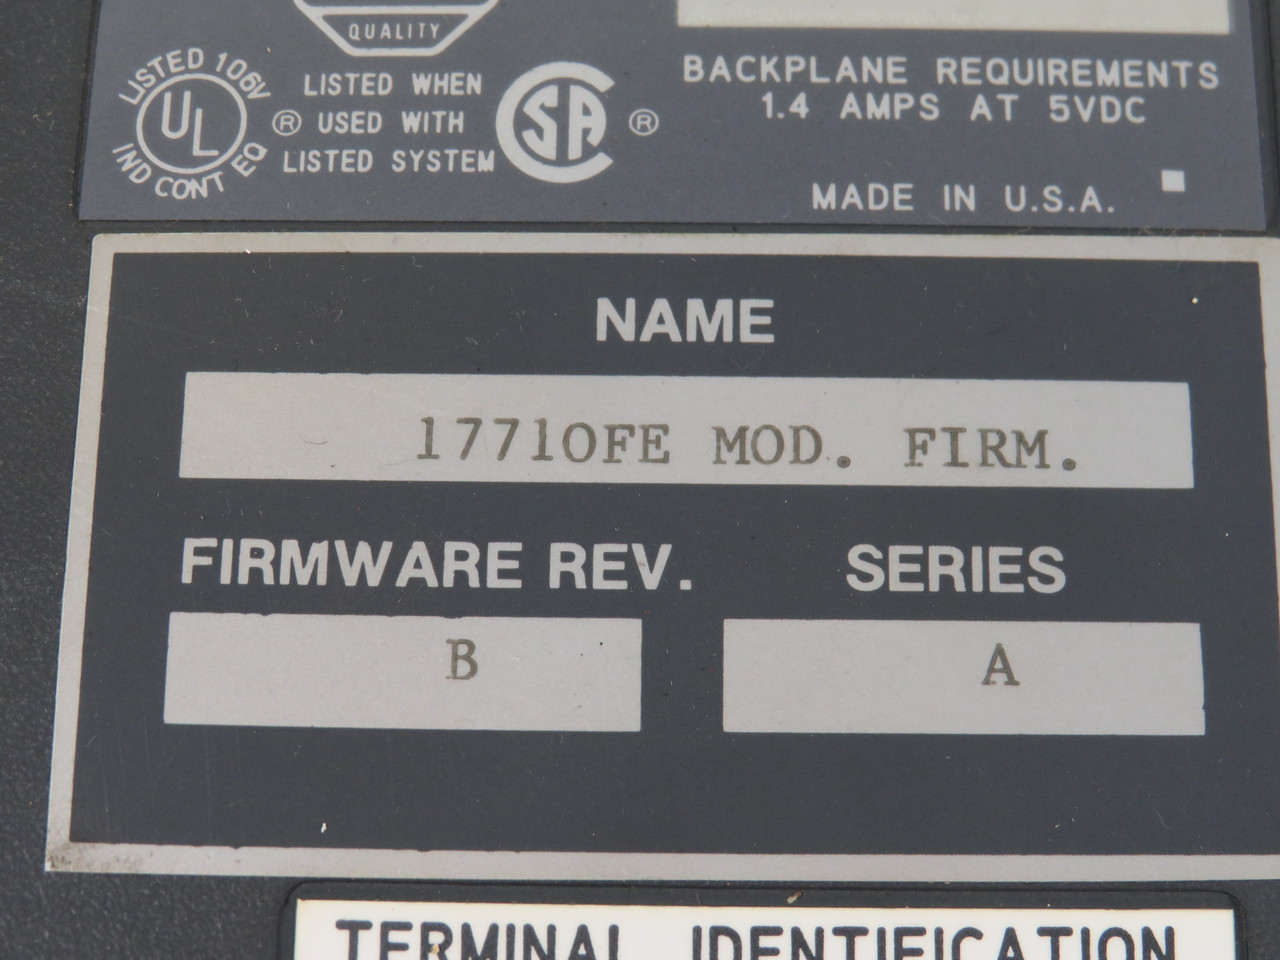 Allen-Bradley 1771-OFE1 12-Bit Analog Voltage Output Module Ser A F/W B USED